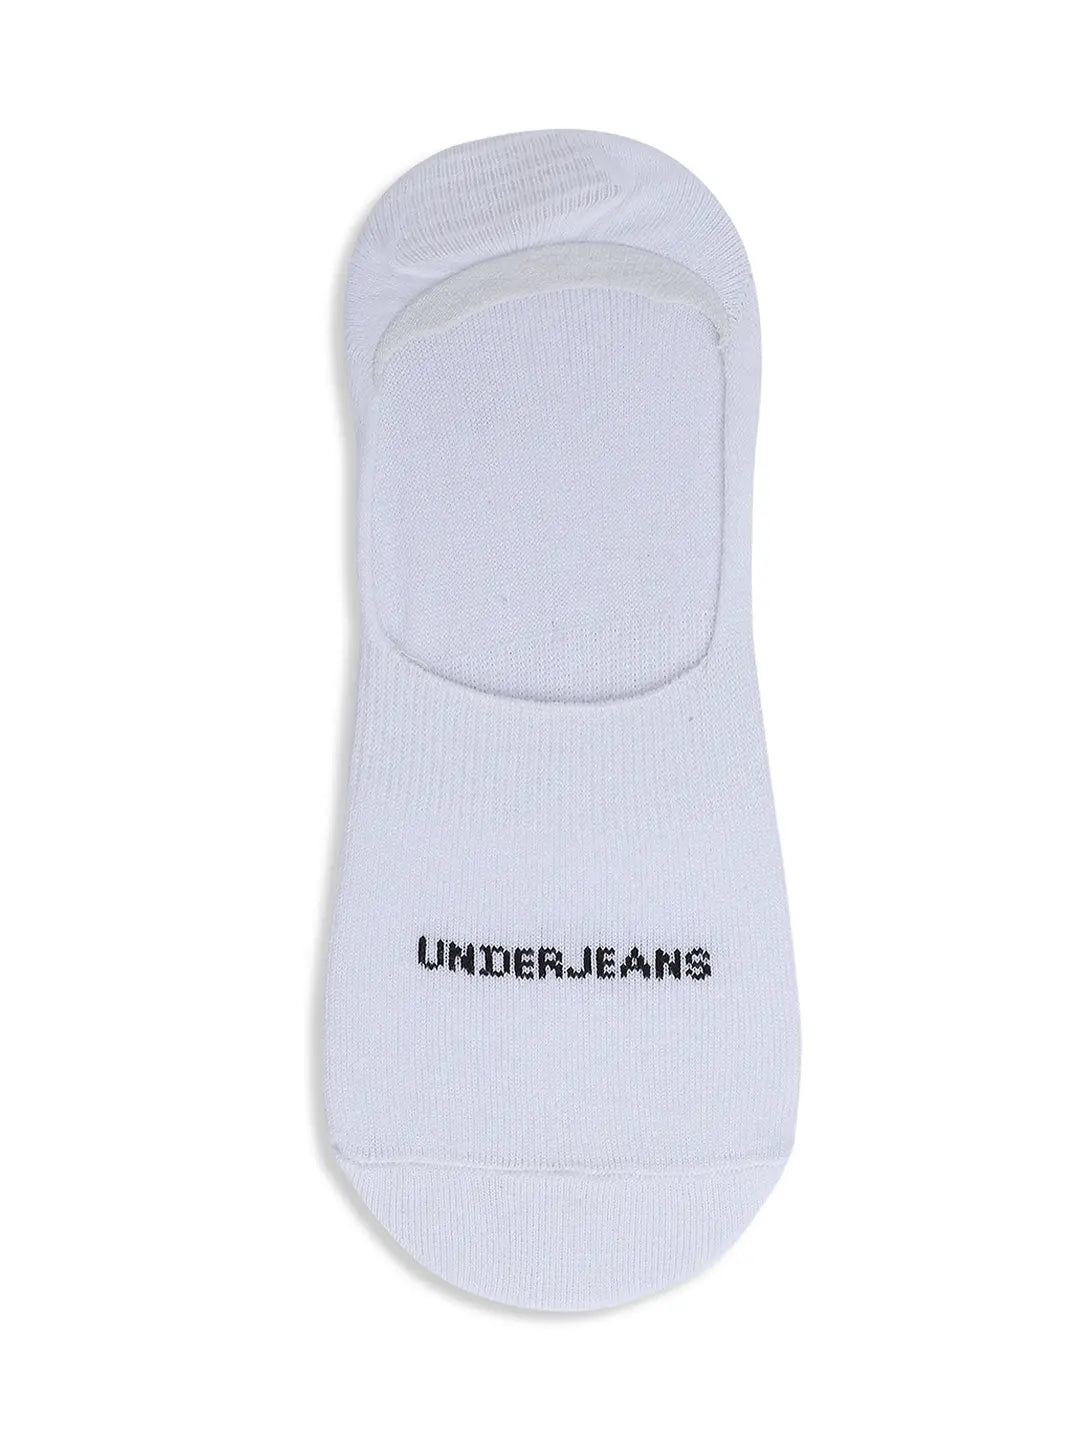 Underjeans By Spykar Men White Cotton Blend No Show Socks - Pack Of 2